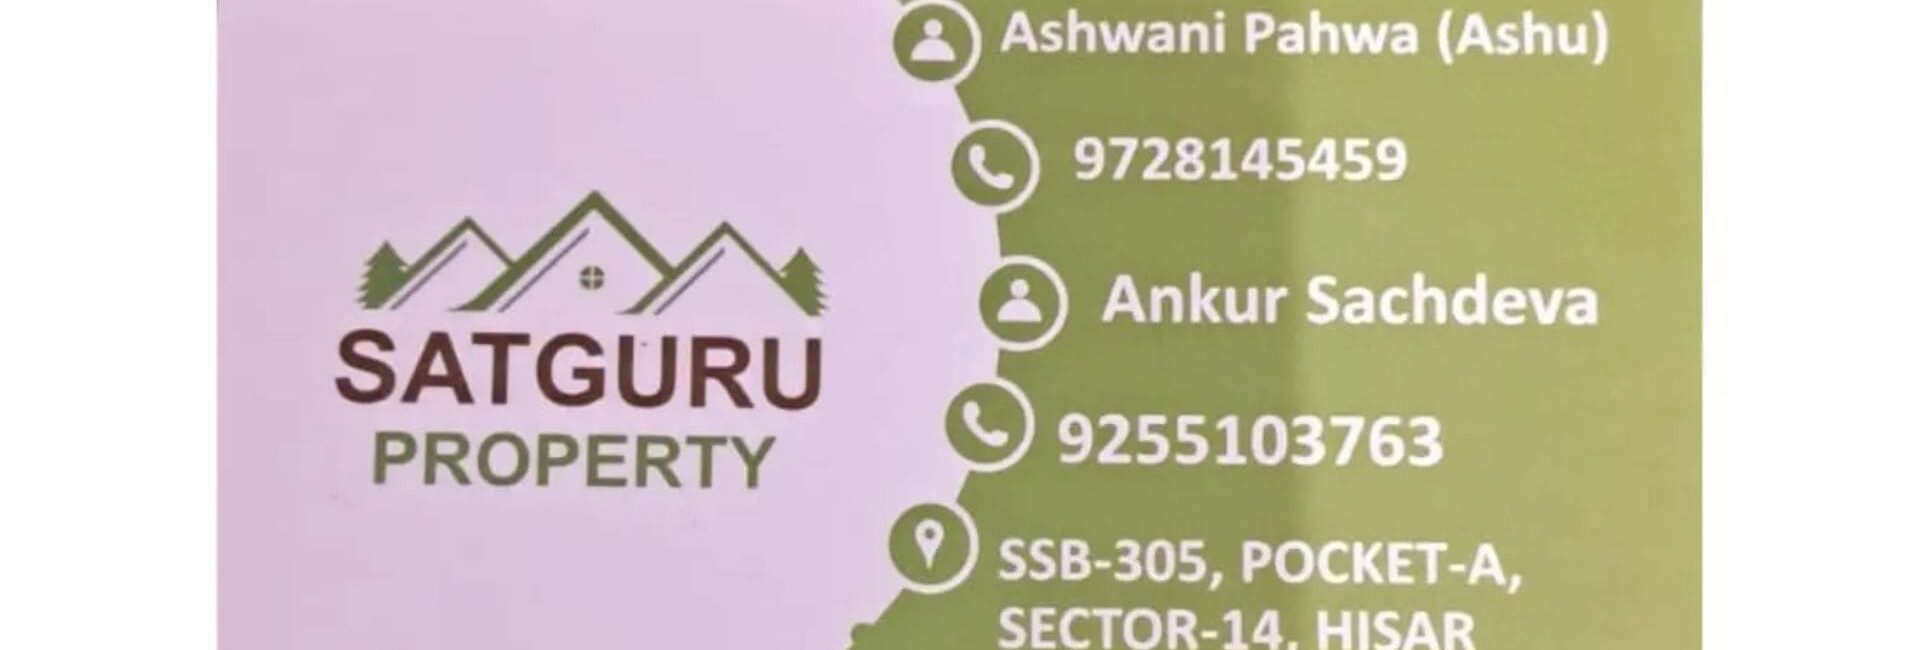 Satguru Property - Real Estate Agent in Hisar